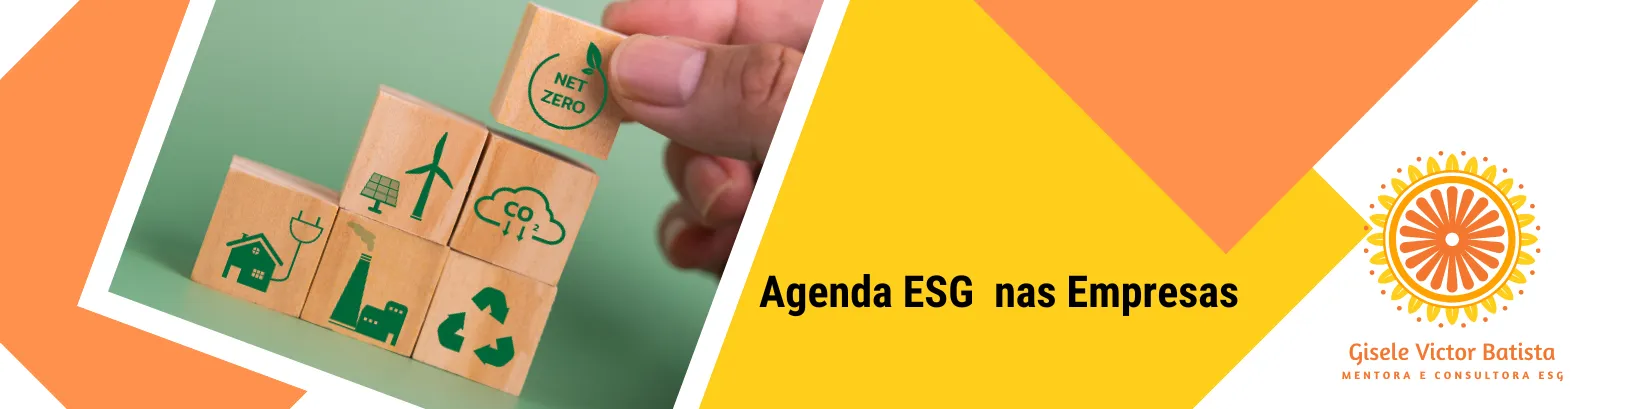 10 termos que todo empreendedor deve saber sobre Agenda ESG